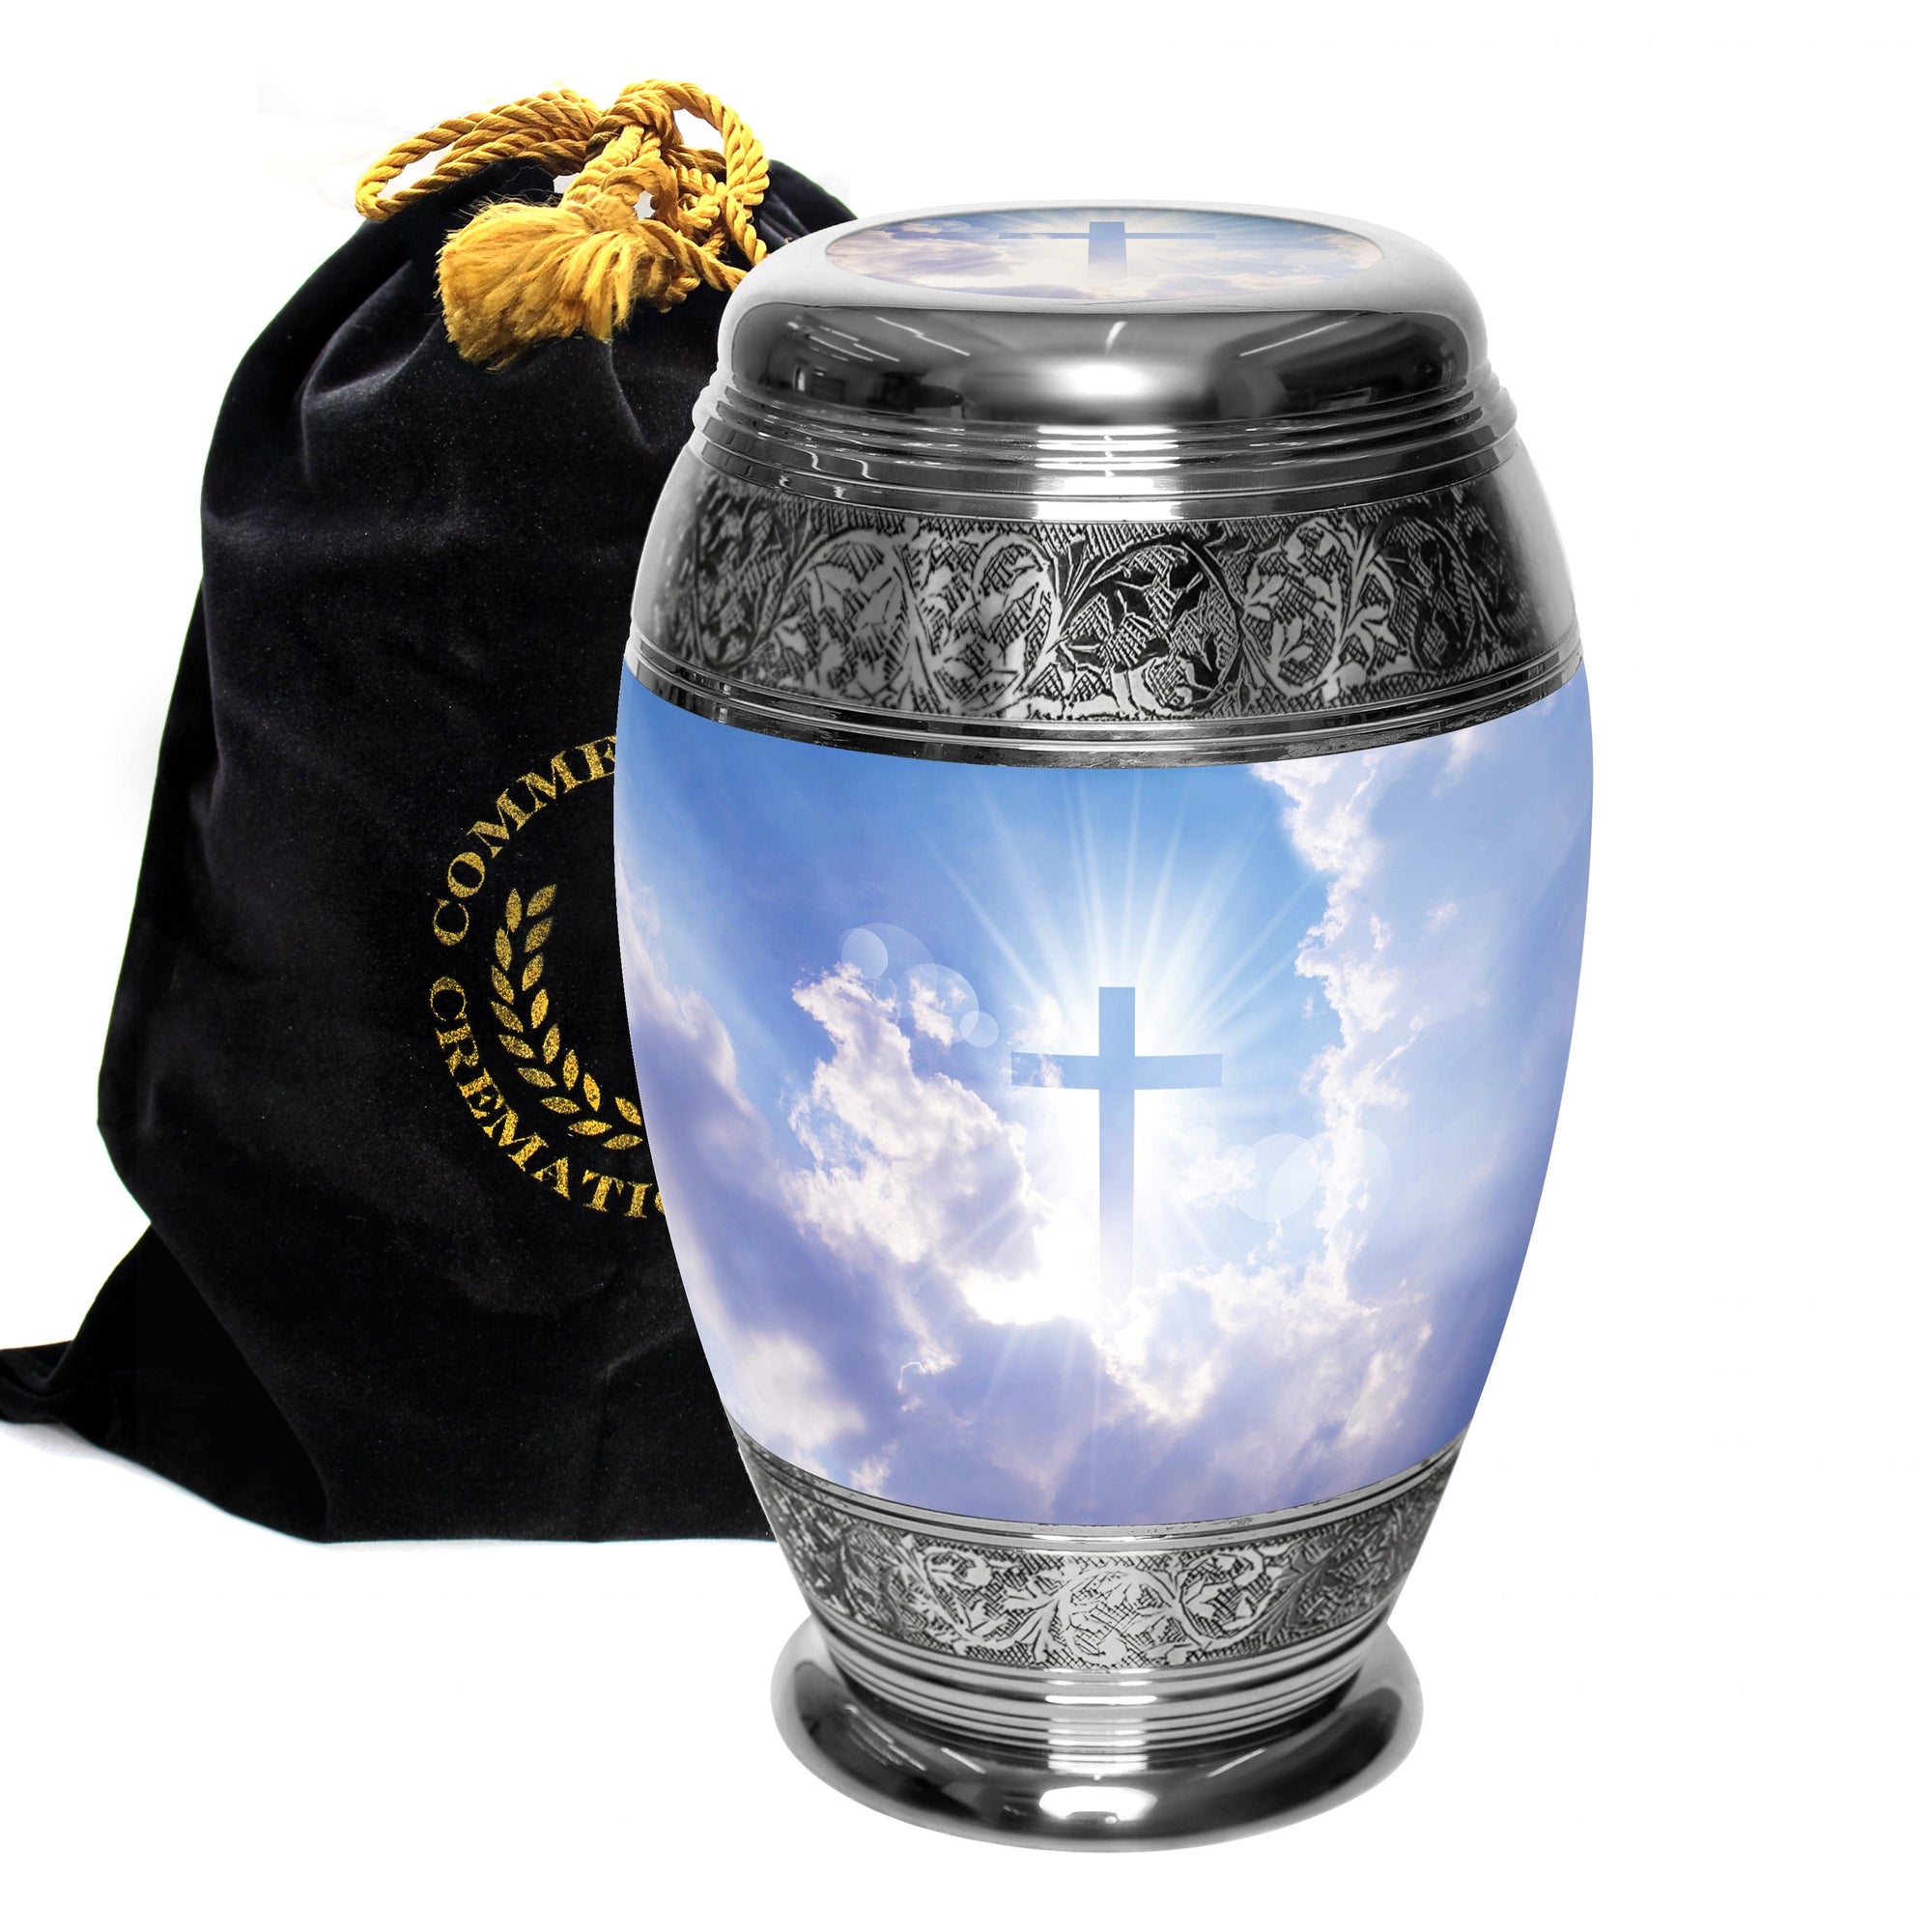 Commemorative Cremation Urns Large Heavenly Cross Cremation Urn